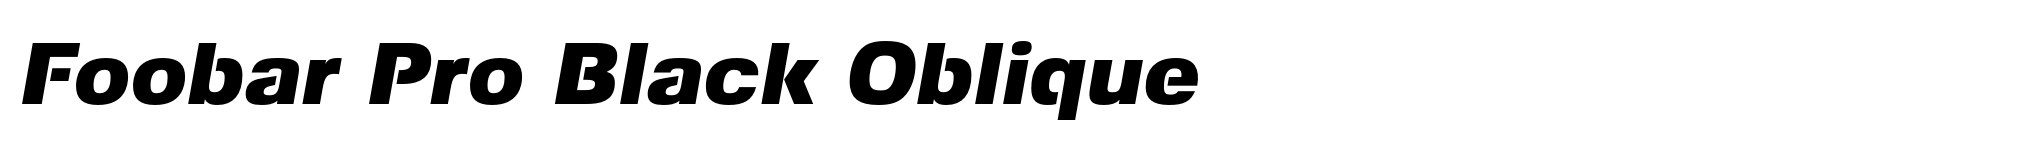 Foobar Pro Black Oblique image